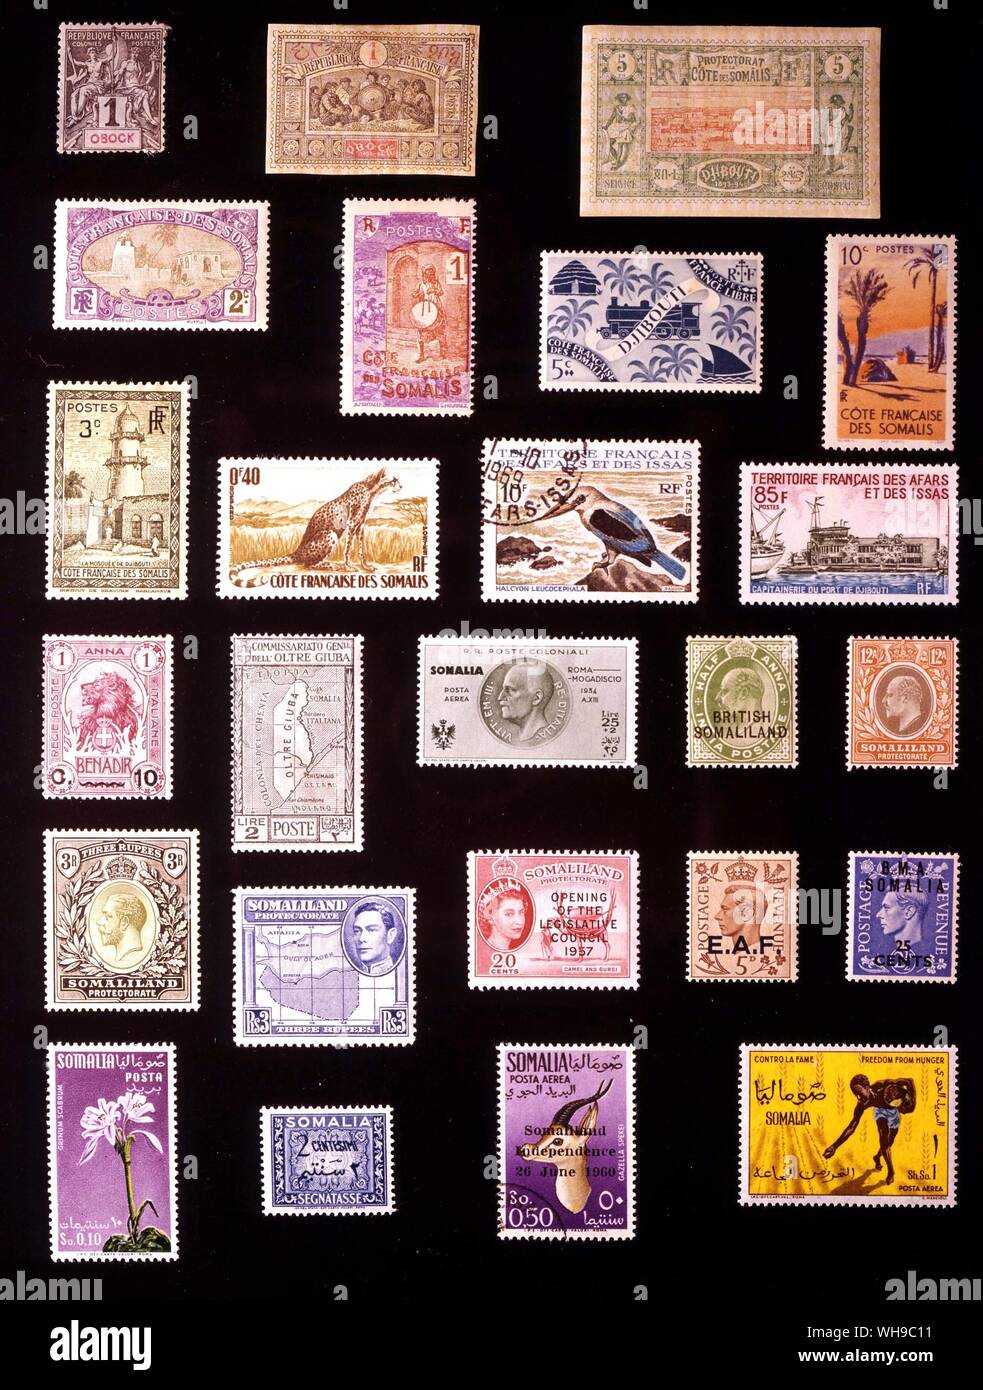 AFRICA - Il Somaliland: (da sinistra a destra) 1. Obock, 1 centesimo, 1892, 2. Obock, 1 centesimo, 1894, 3. Gibuti, 5 centesimi, 1894, 4. Francese costa somala, 2 centesimi, 1909, 5. Francese costa somala, 1 centesimo, 1915, 6. Francese costa somala, 5 centesimi, 1943, 7. Francese costa somala, 10 centesimi, 1947, 8. Francese costa somala, 3 centesimi, 1938, 9. Francese costa somala, 40 centesimi, 1958, 10. Il territorio francese degli Afar e degli Issa, 10 franchi, 1967, 11. Il territorio francese degli Afar e Isaas, 85 franchi, 1968, 12. Benadir, 10 centesimi, 1907, 13. Jubaland, 2 lire, 1926, 14. Somalia Italiana, 25 + 2 lire, 1934, Foto Stock